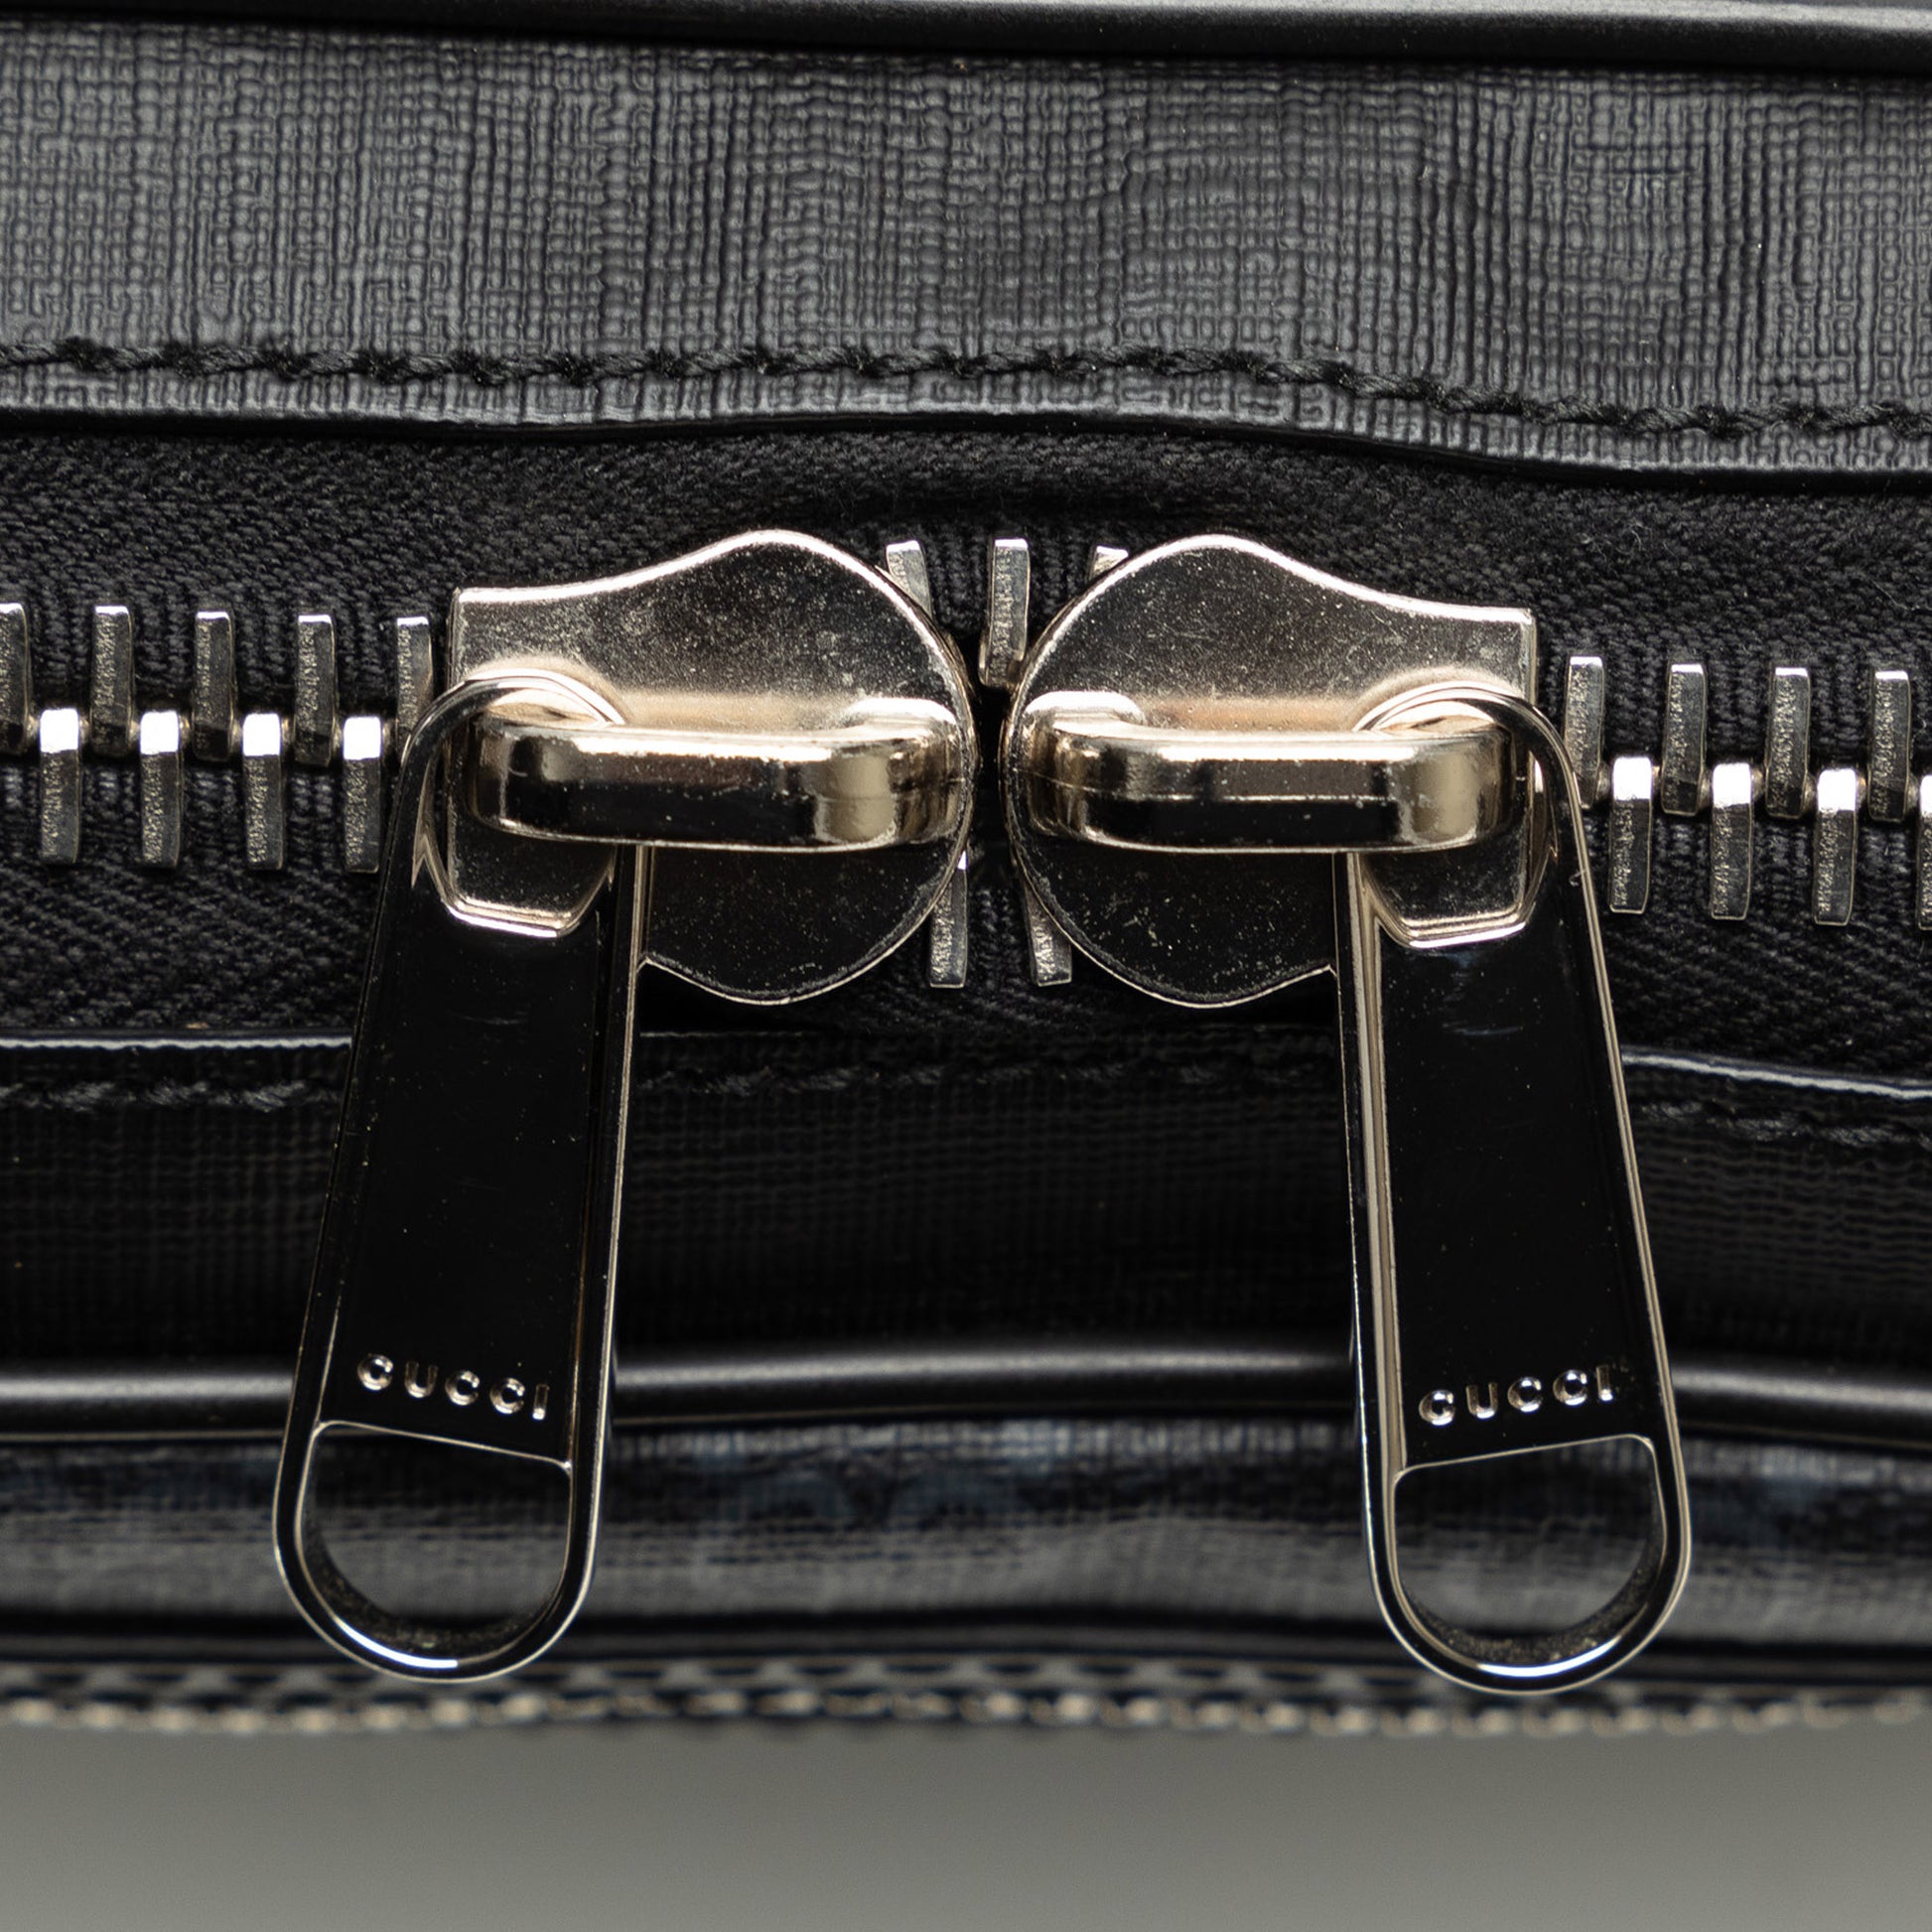 GG Supreme Web Belt Bag Black - Gaby Paris